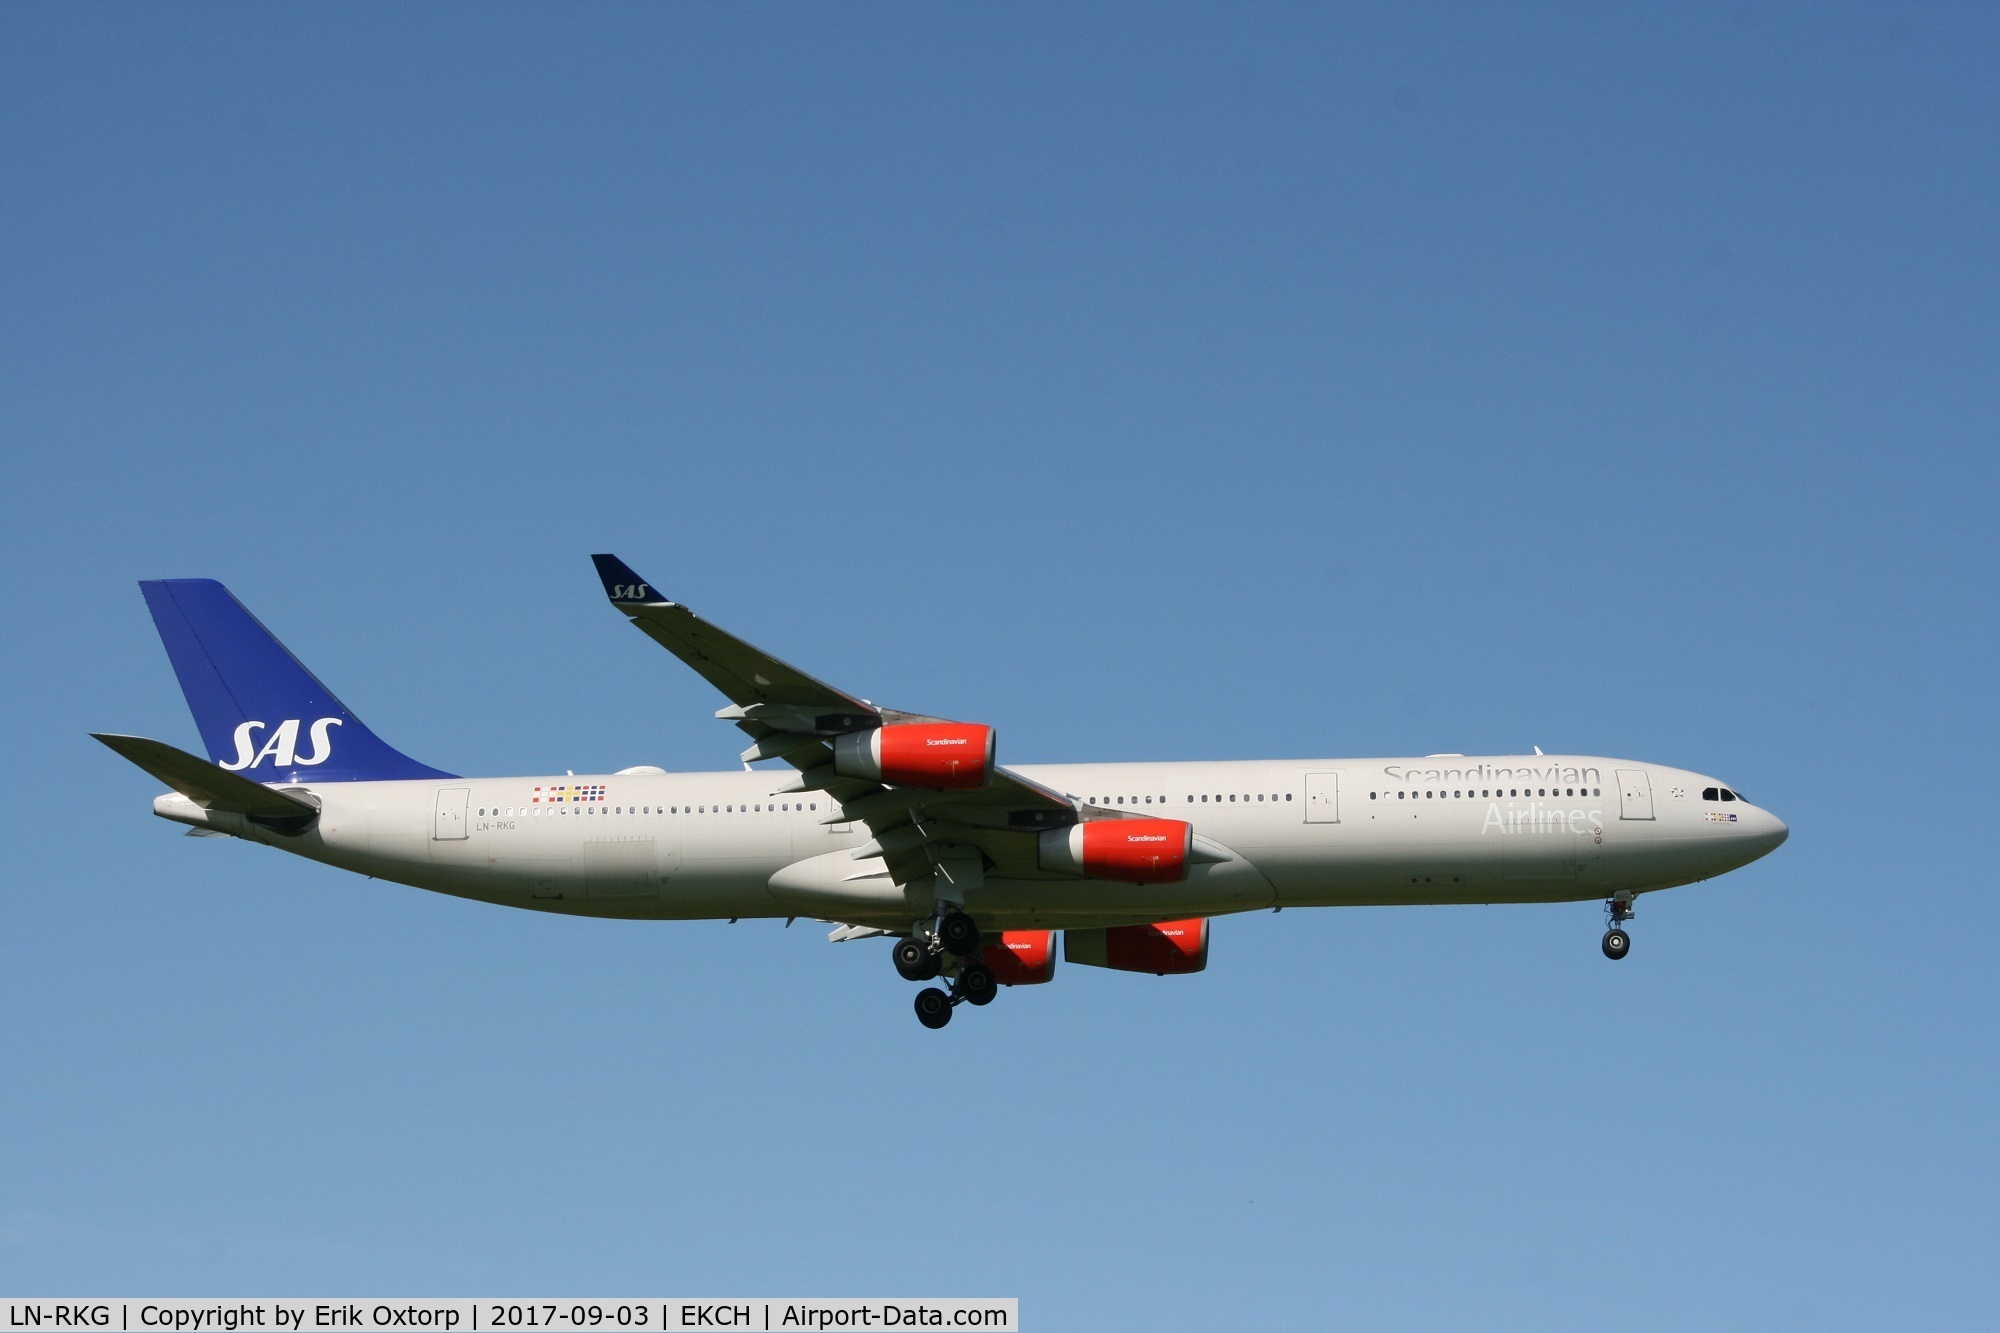 LN-RKG, 2001 Airbus A340-313X C/N 424, LN-RKG landing rw 04L